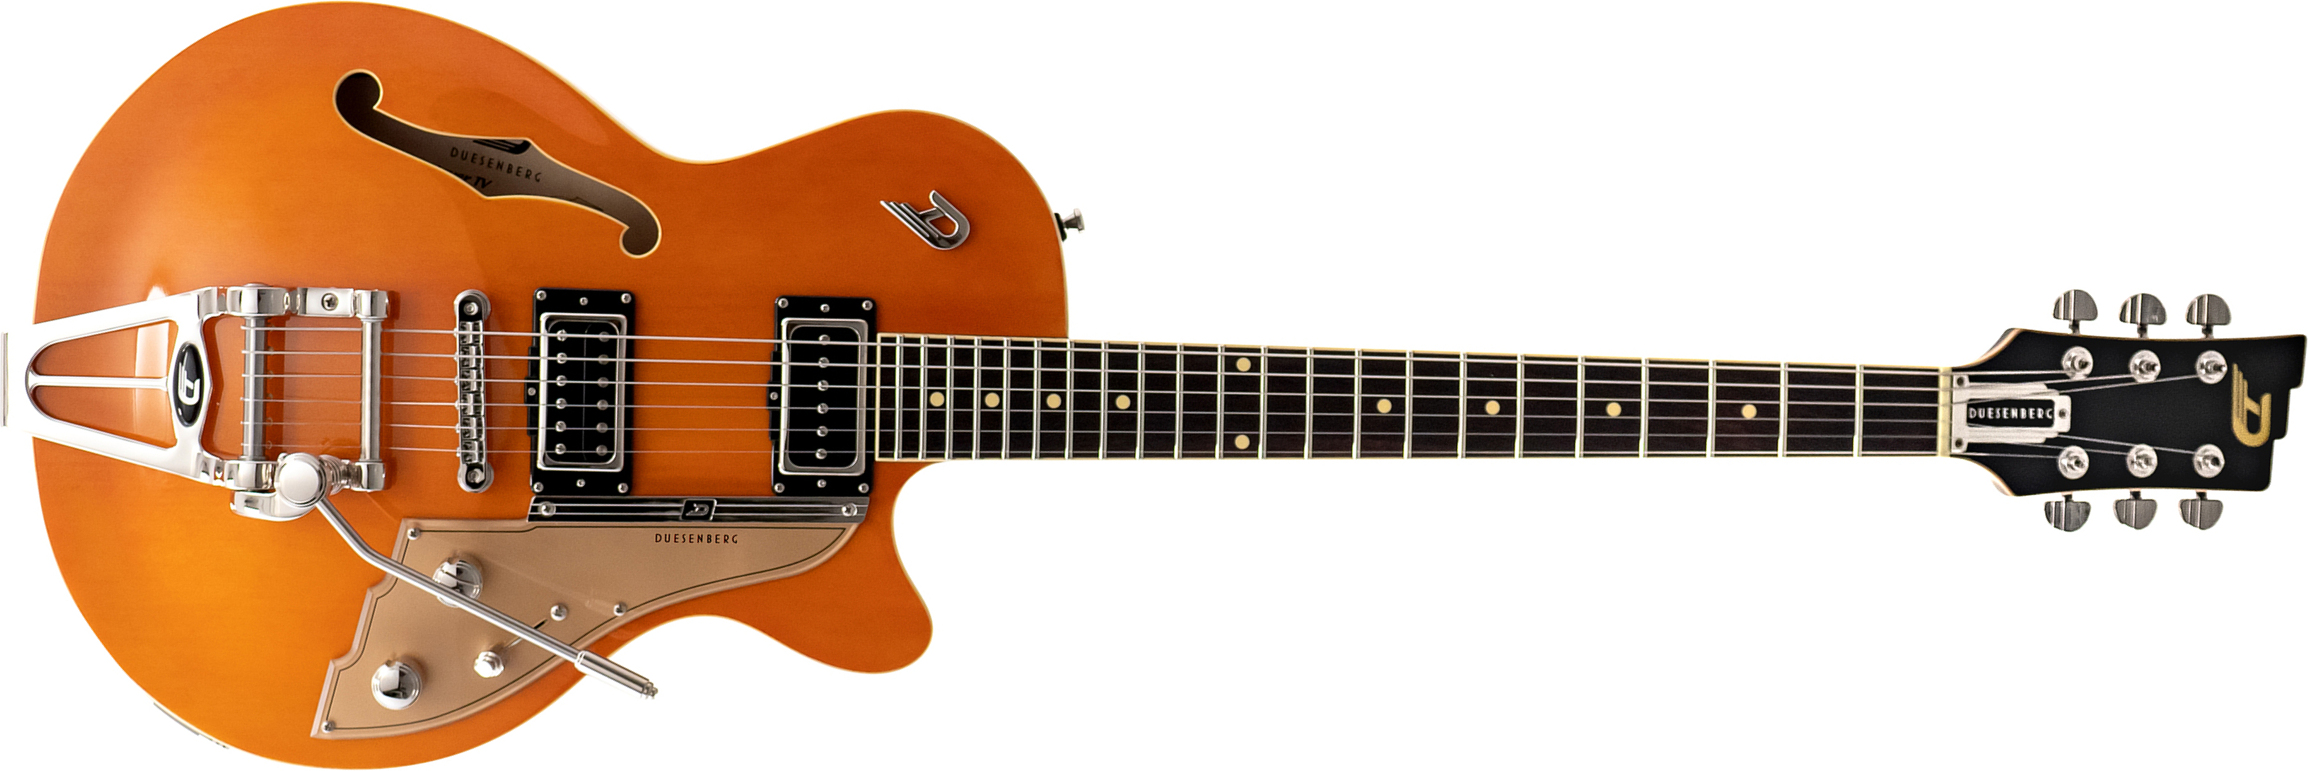 Duesenberg Starplayer Tv Hs Trem Rw - Vintage Orange - Semi-hollow electric guitar - Main picture